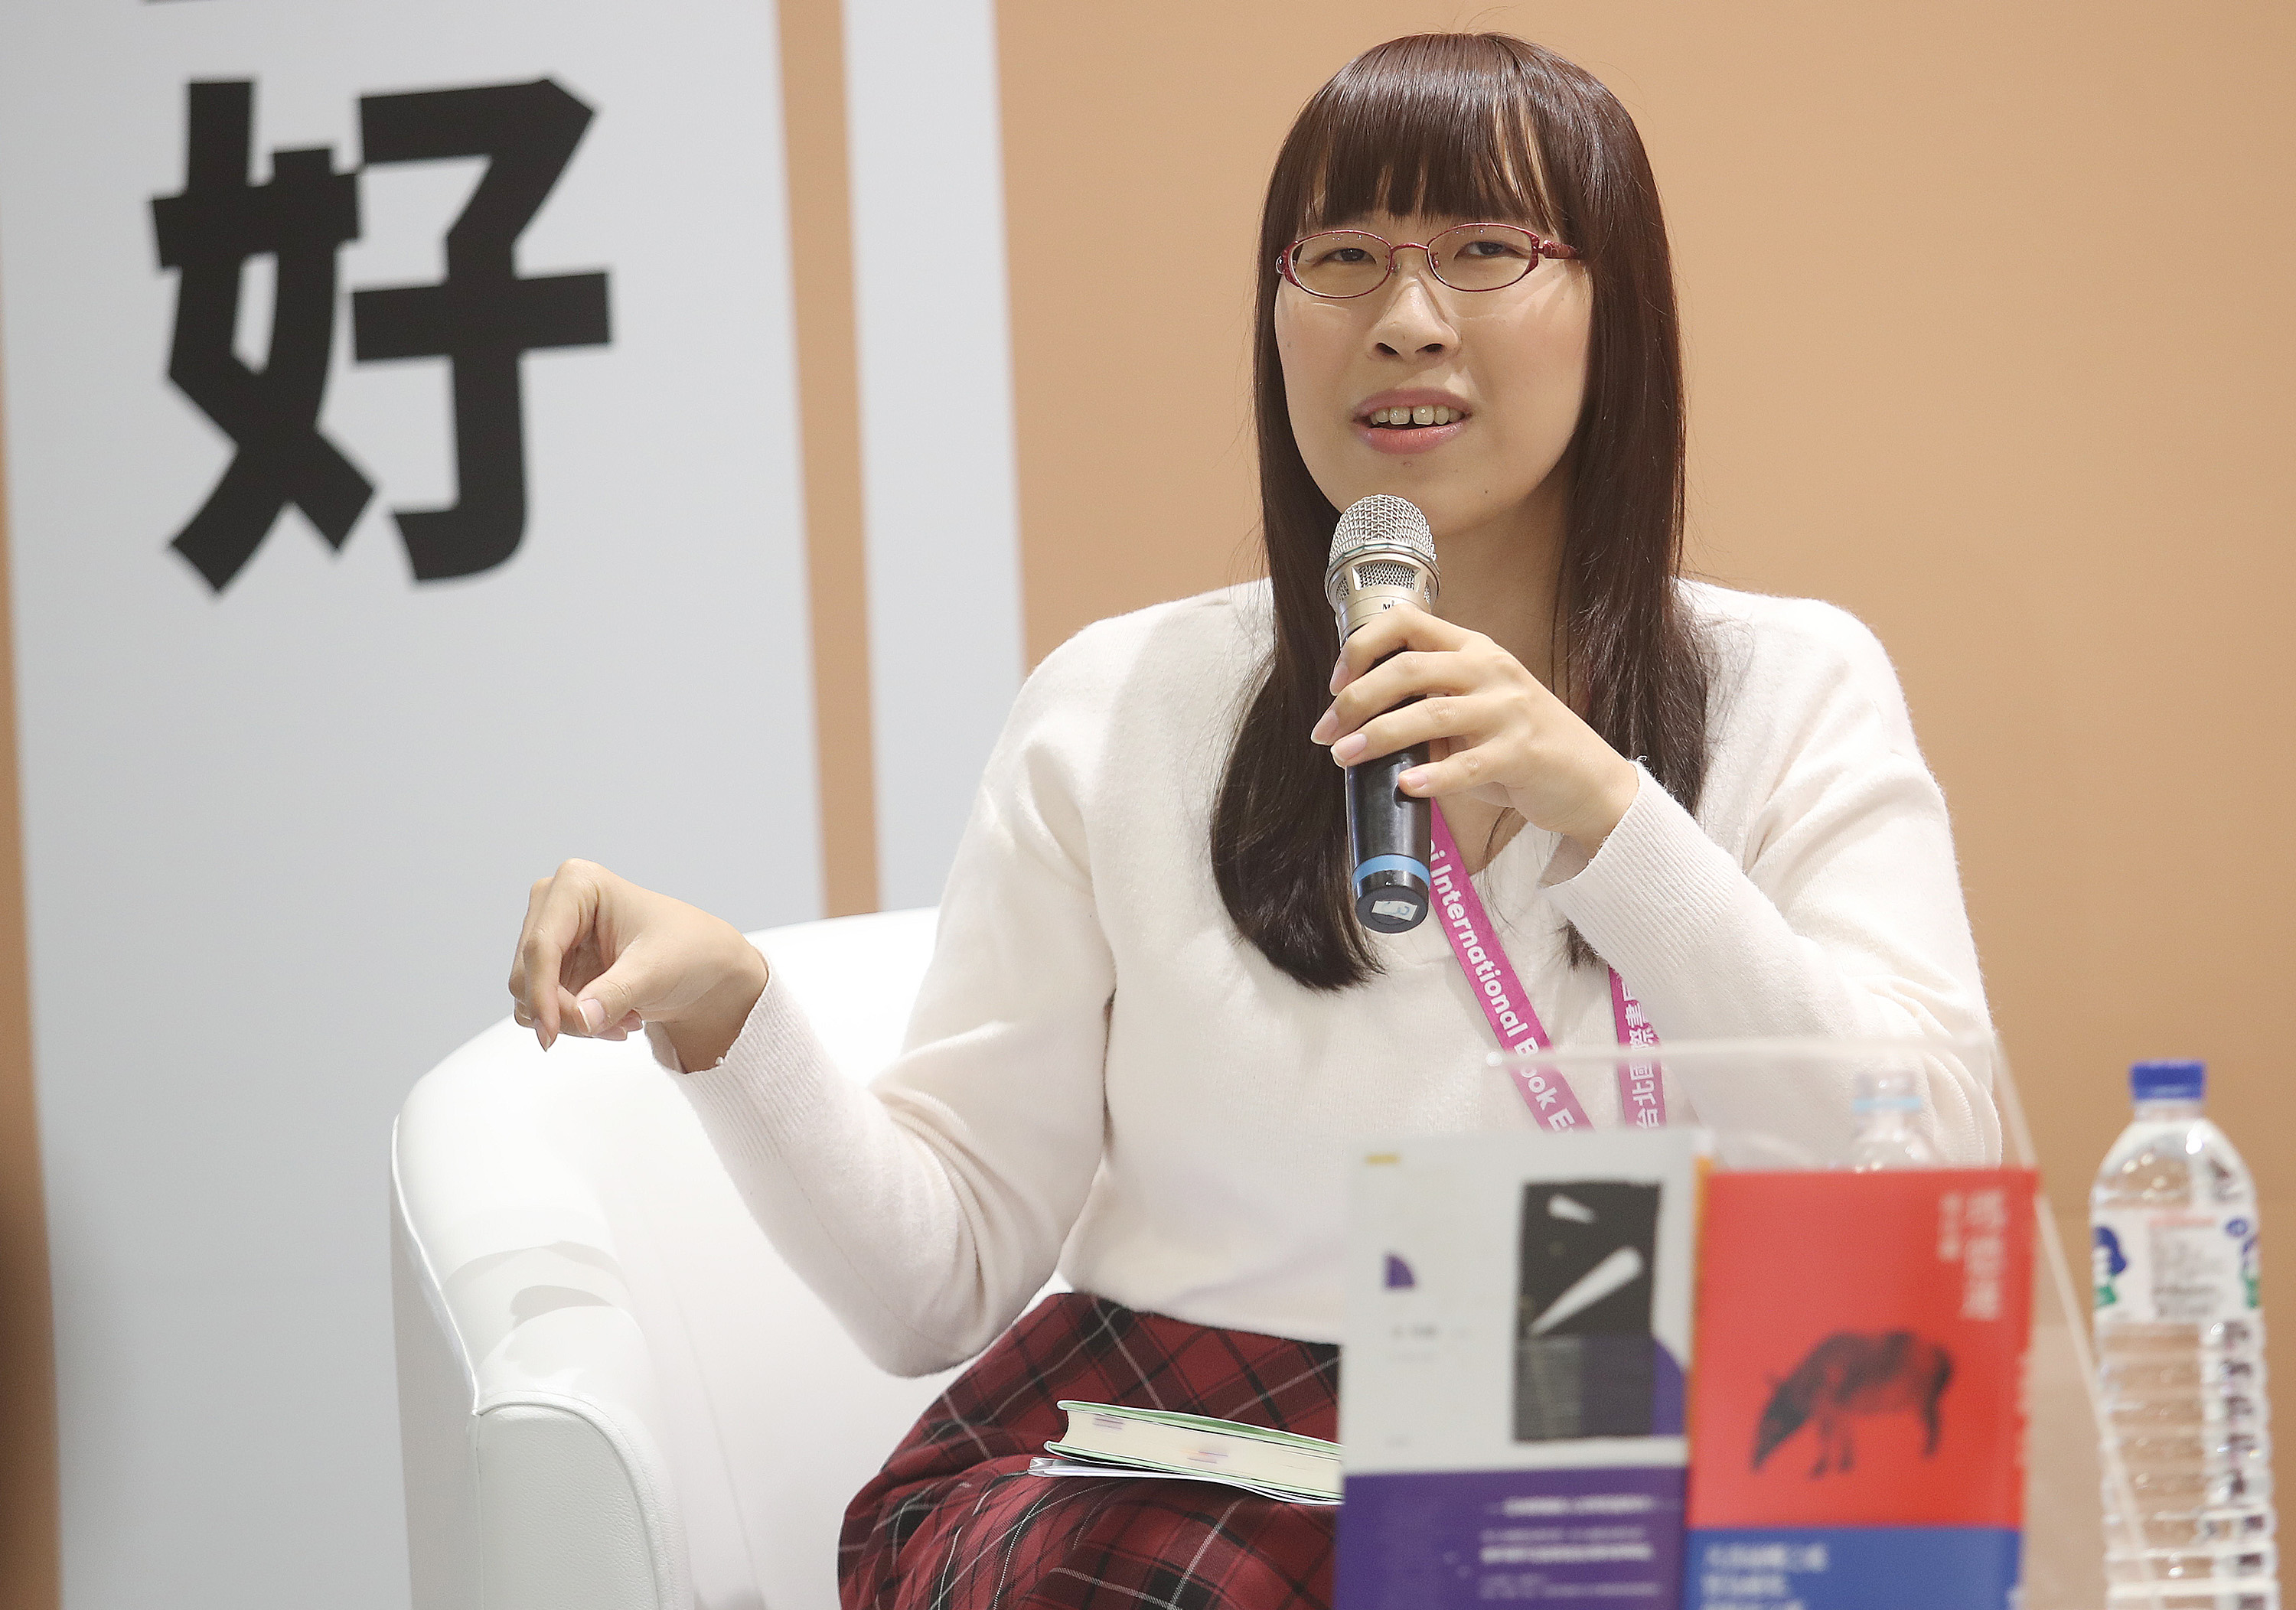 Taiwanese writer Li Qinfeng wins prestigious Japanese arts award for novel